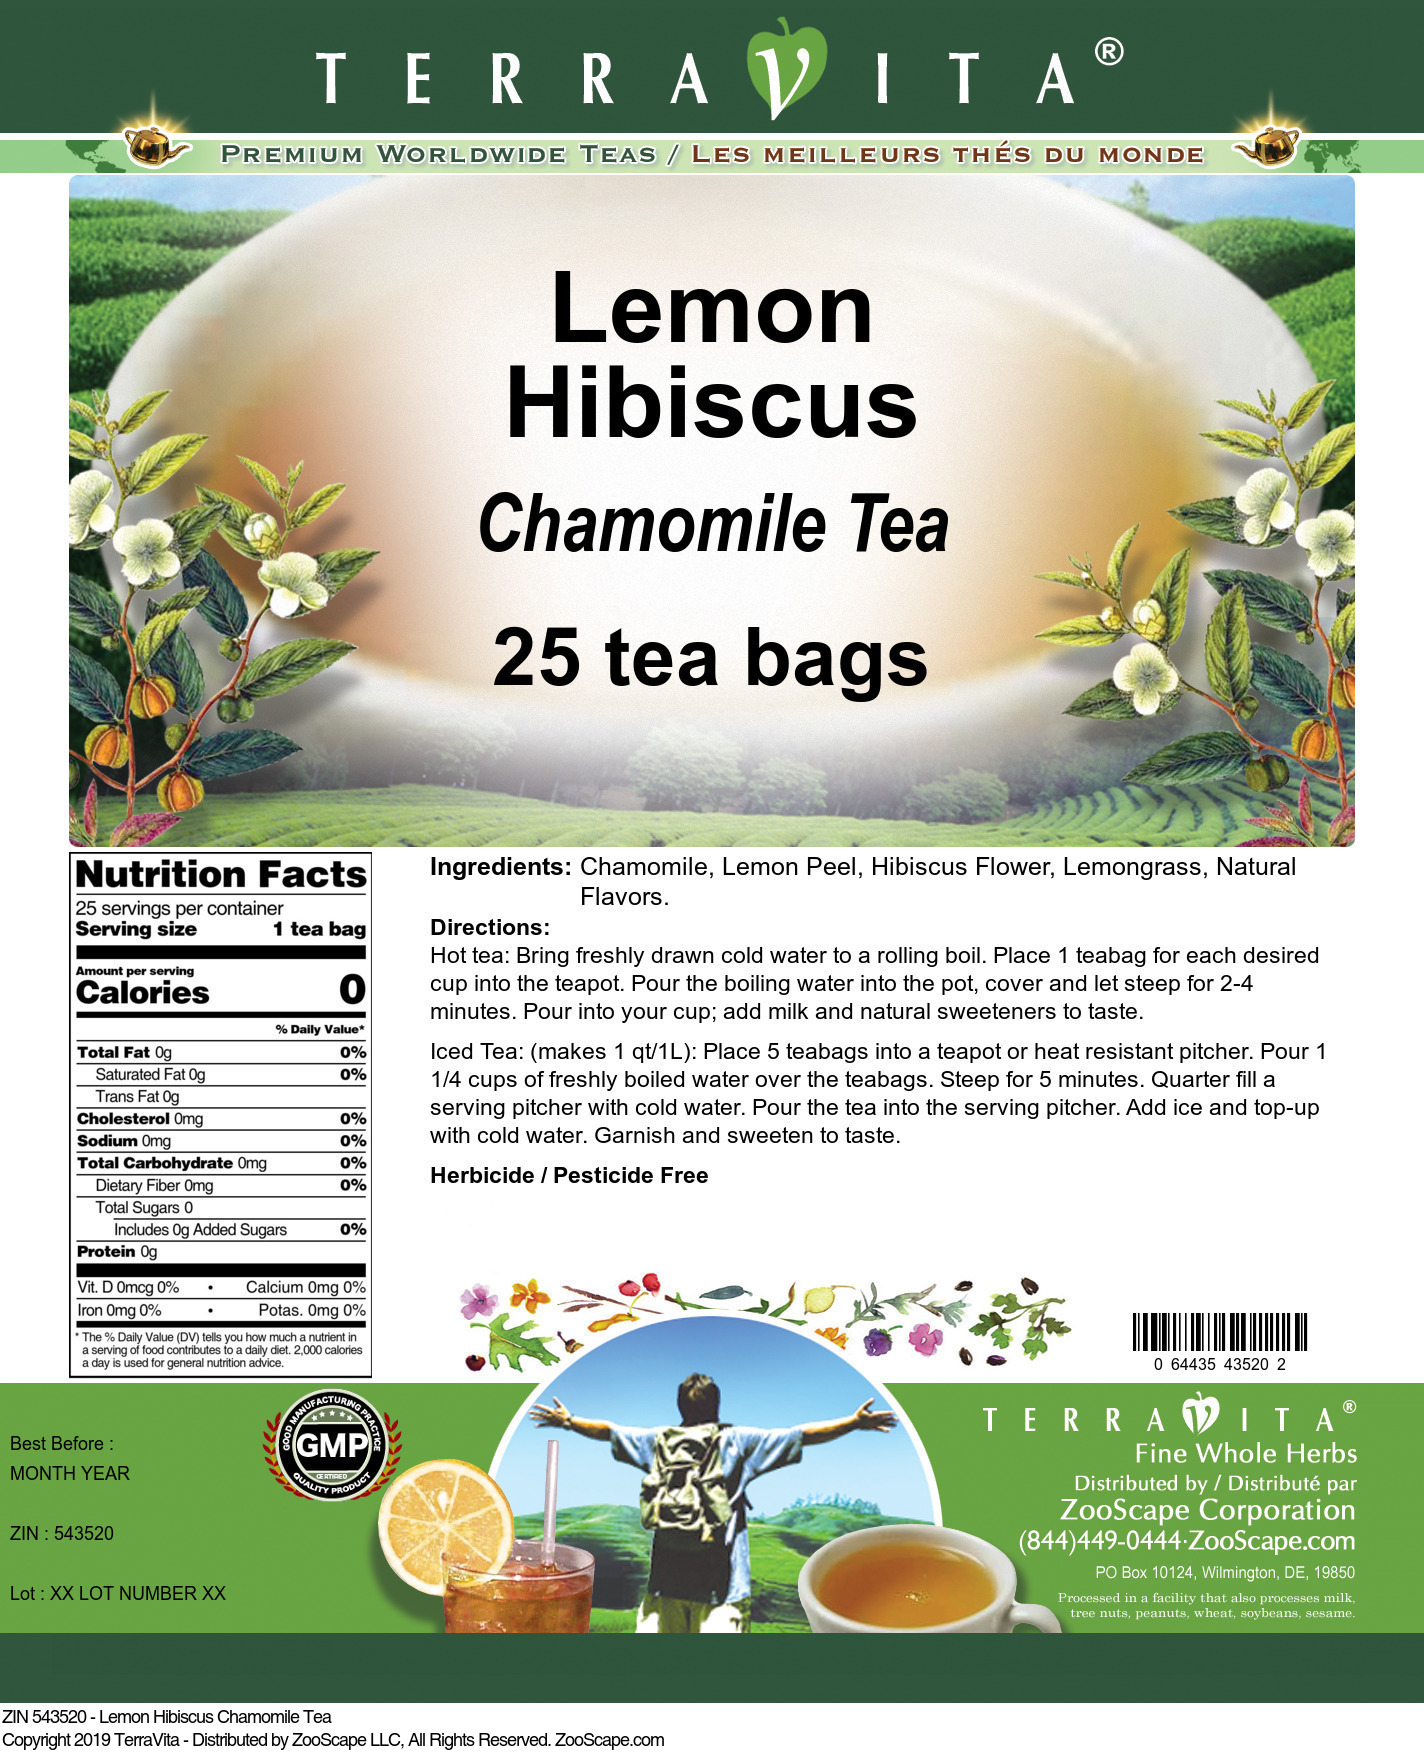 Lemon Hibiscus Chamomile Tea - Label